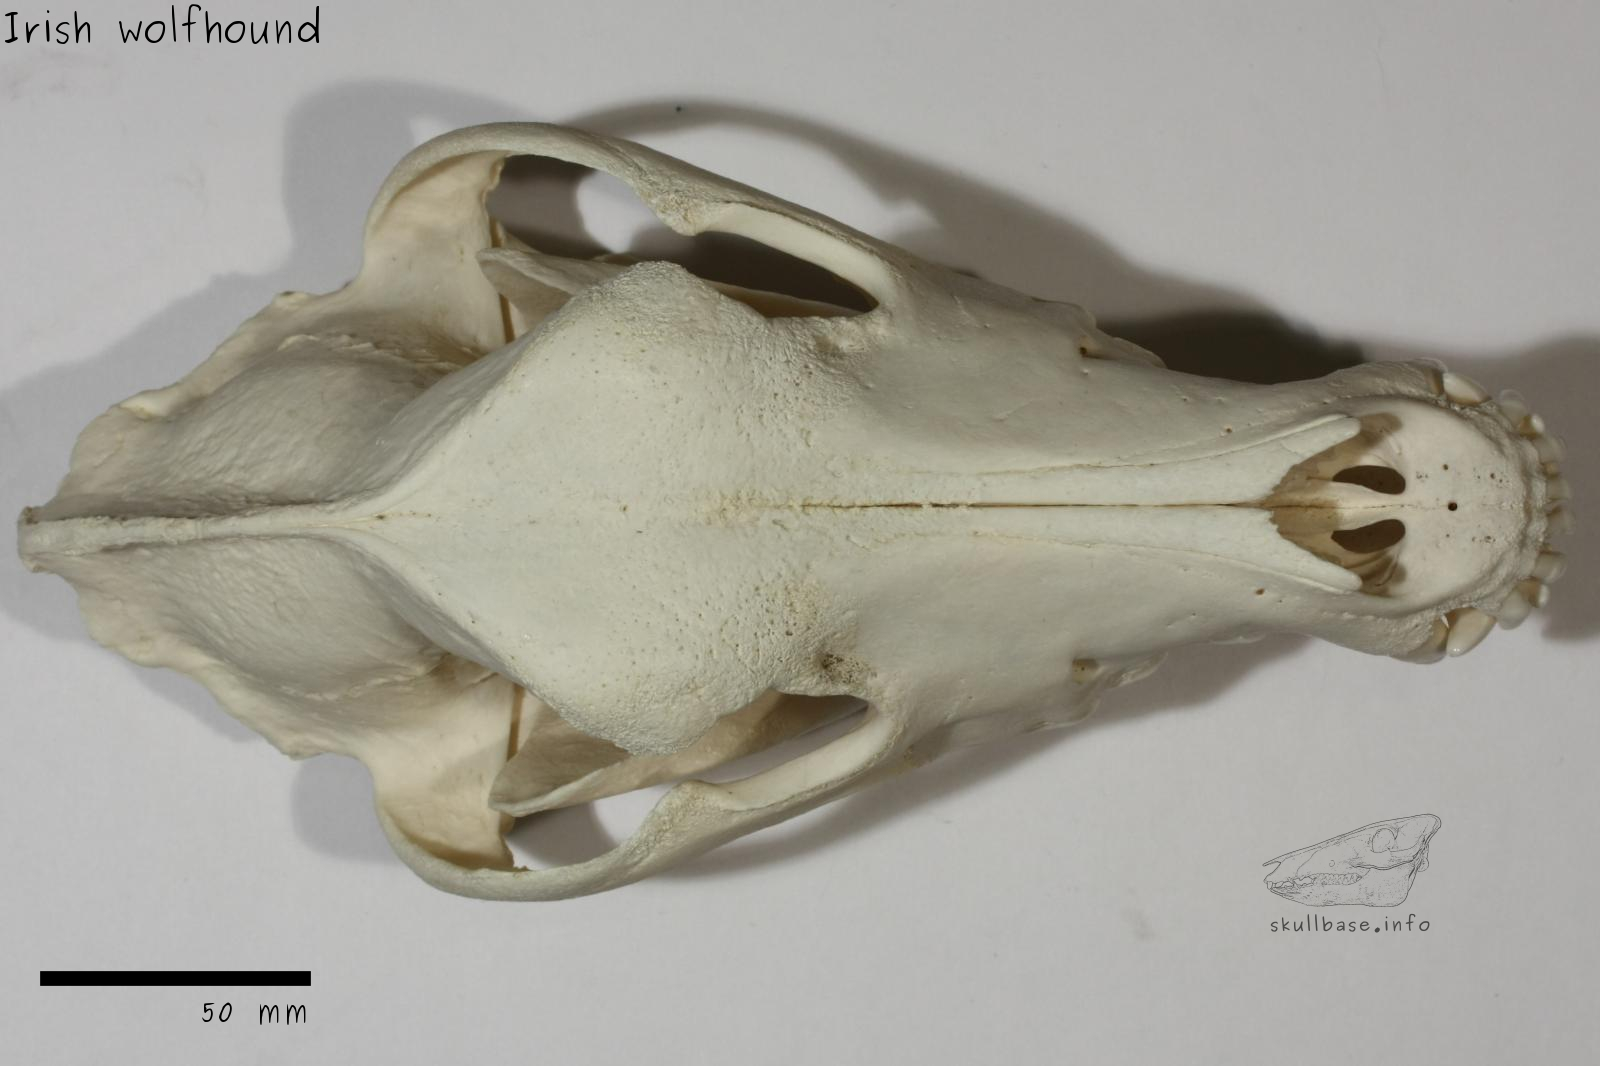 Irish wolfhound (Canis lupus familiaris) skull dorsal view